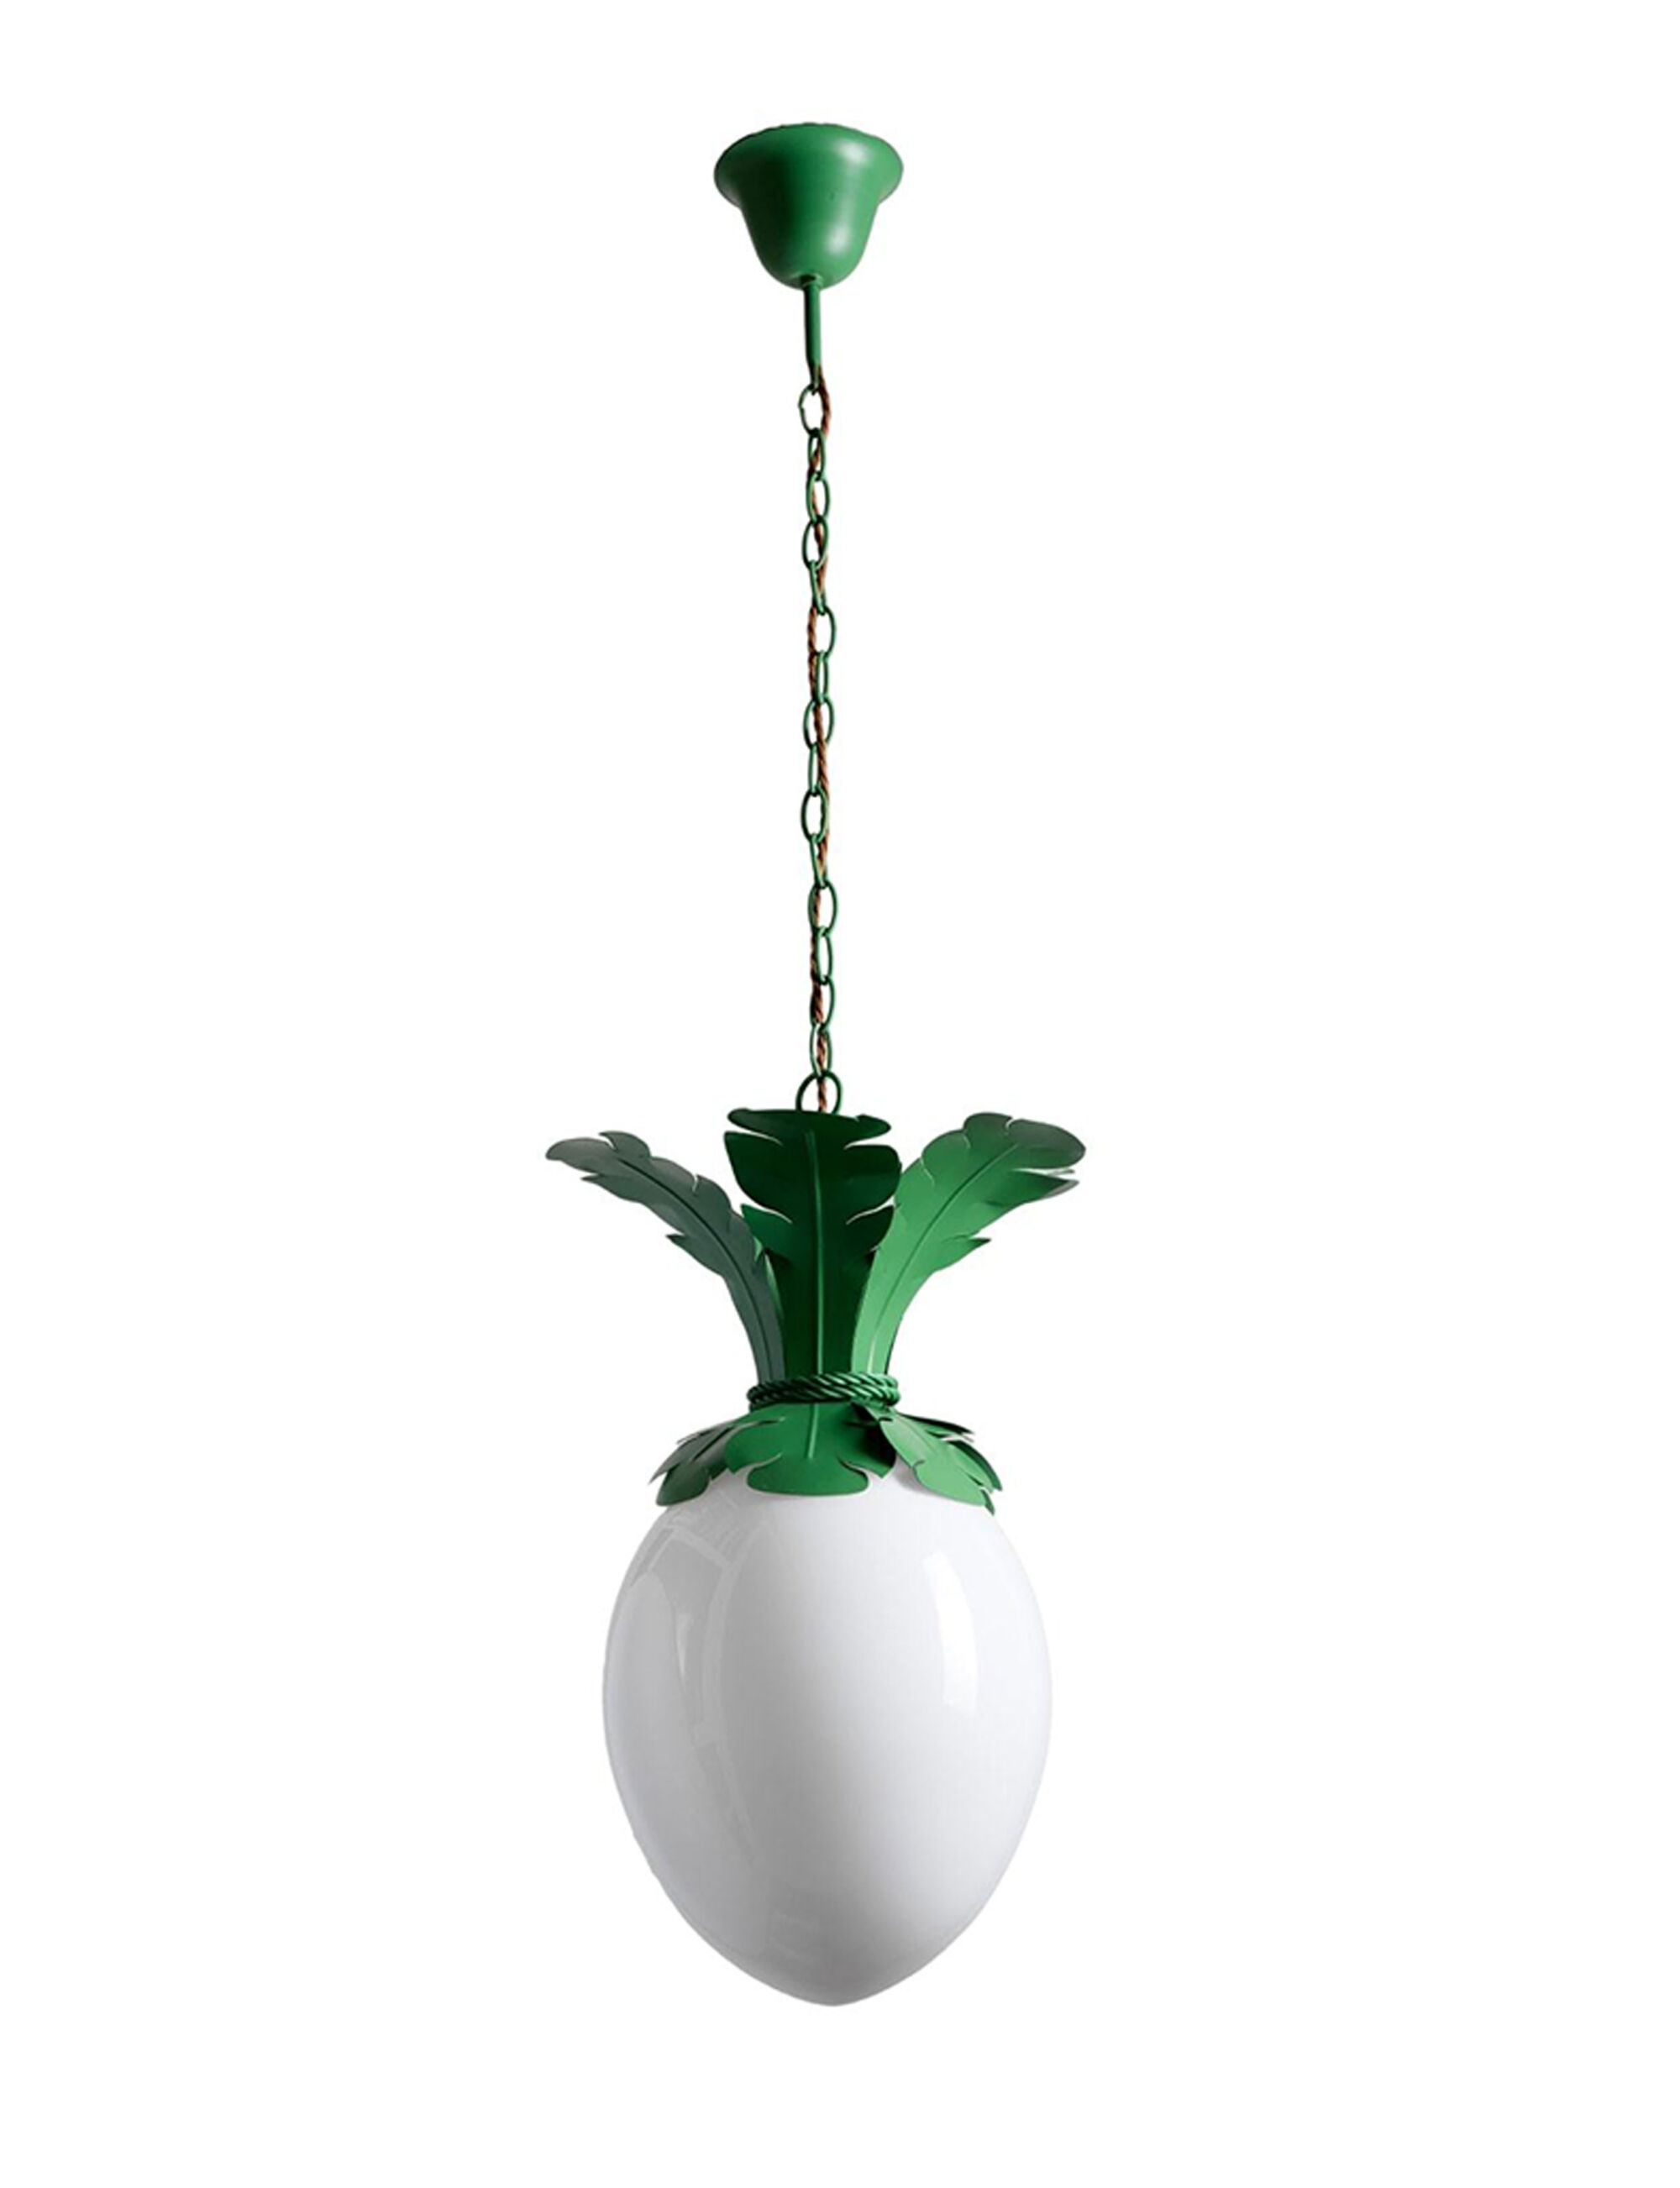 The Wick - Objects Dodo Egg Lamp, Beata Heuman